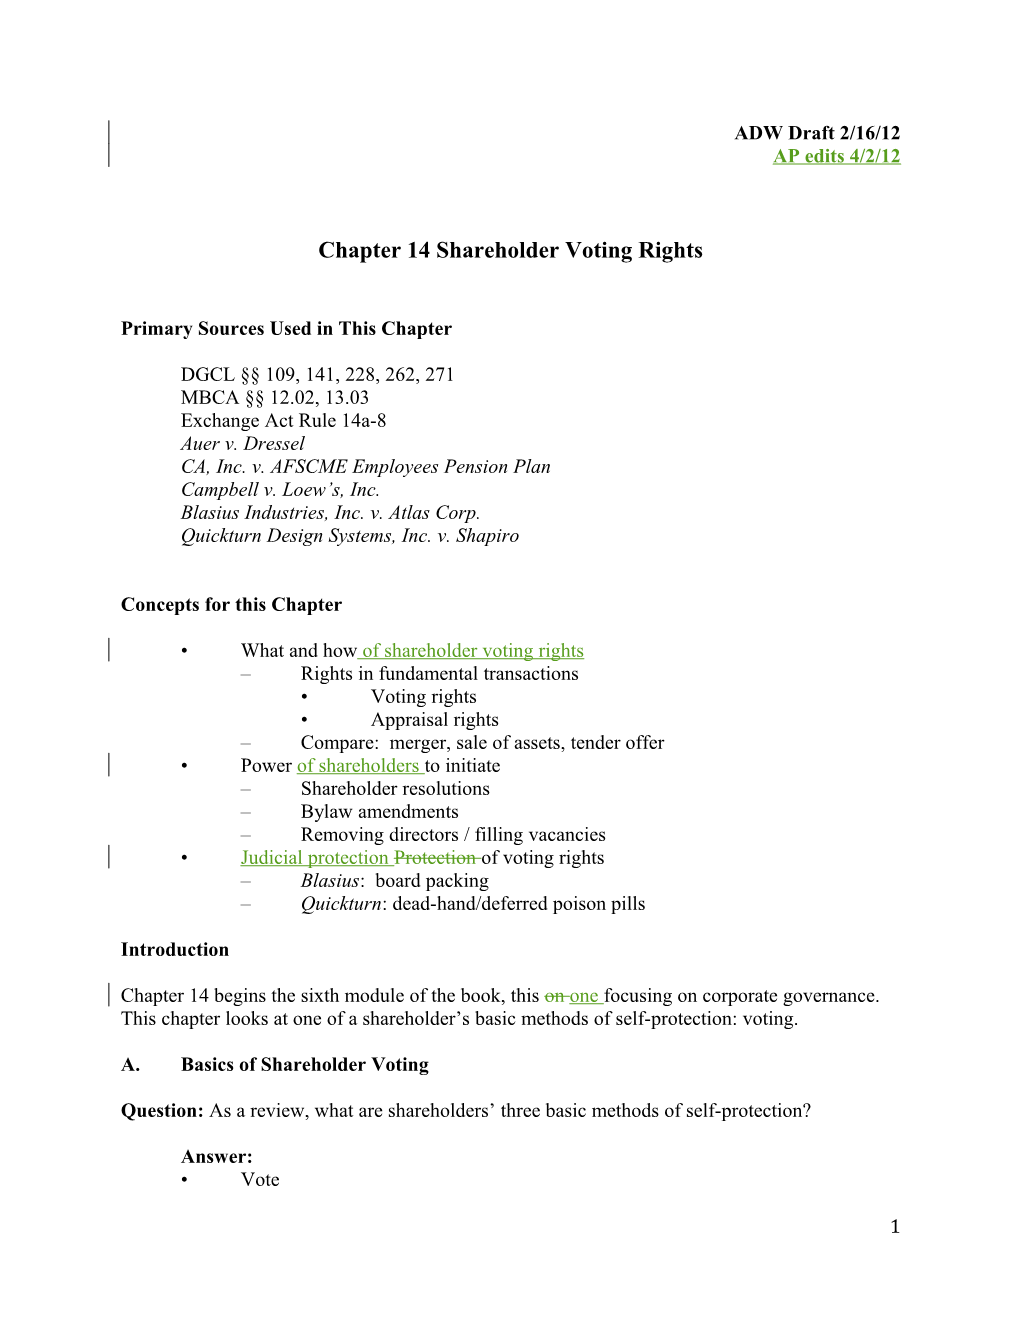 Chapter 14 Shareholder Voting Rights